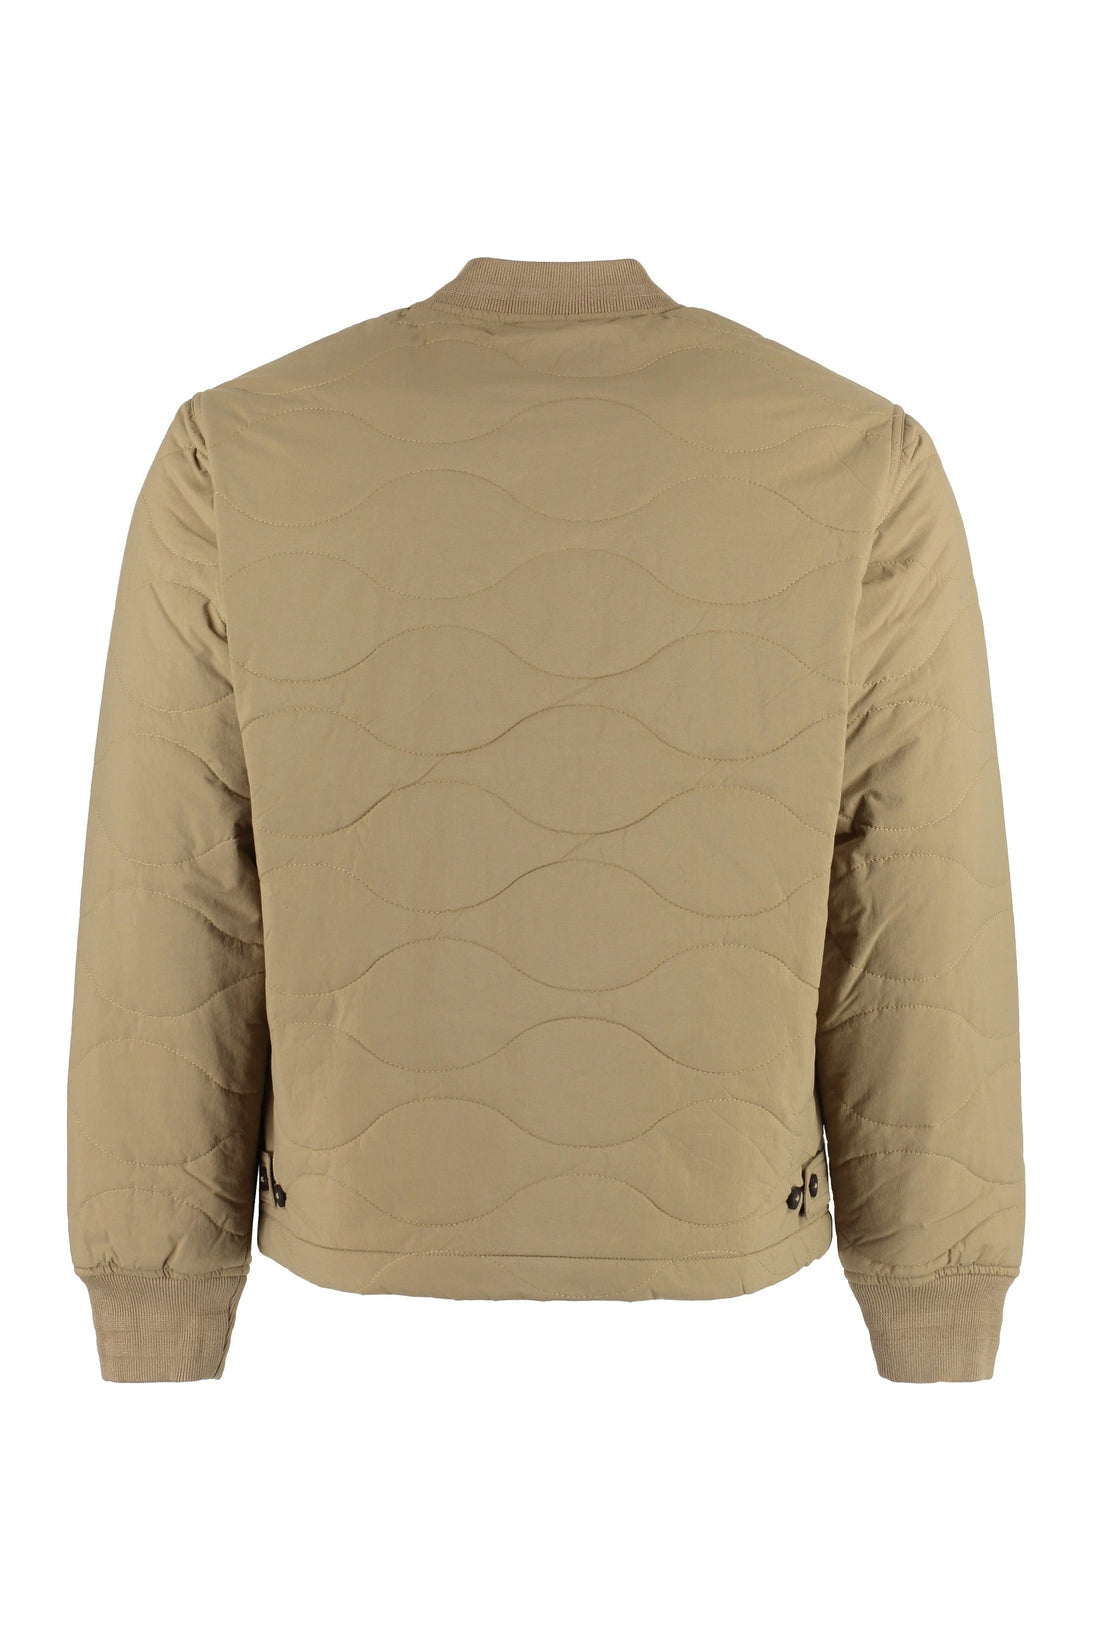 Piralo-OUTLET-SALE-Carlton techno fabric jacket-ARCHIVIST